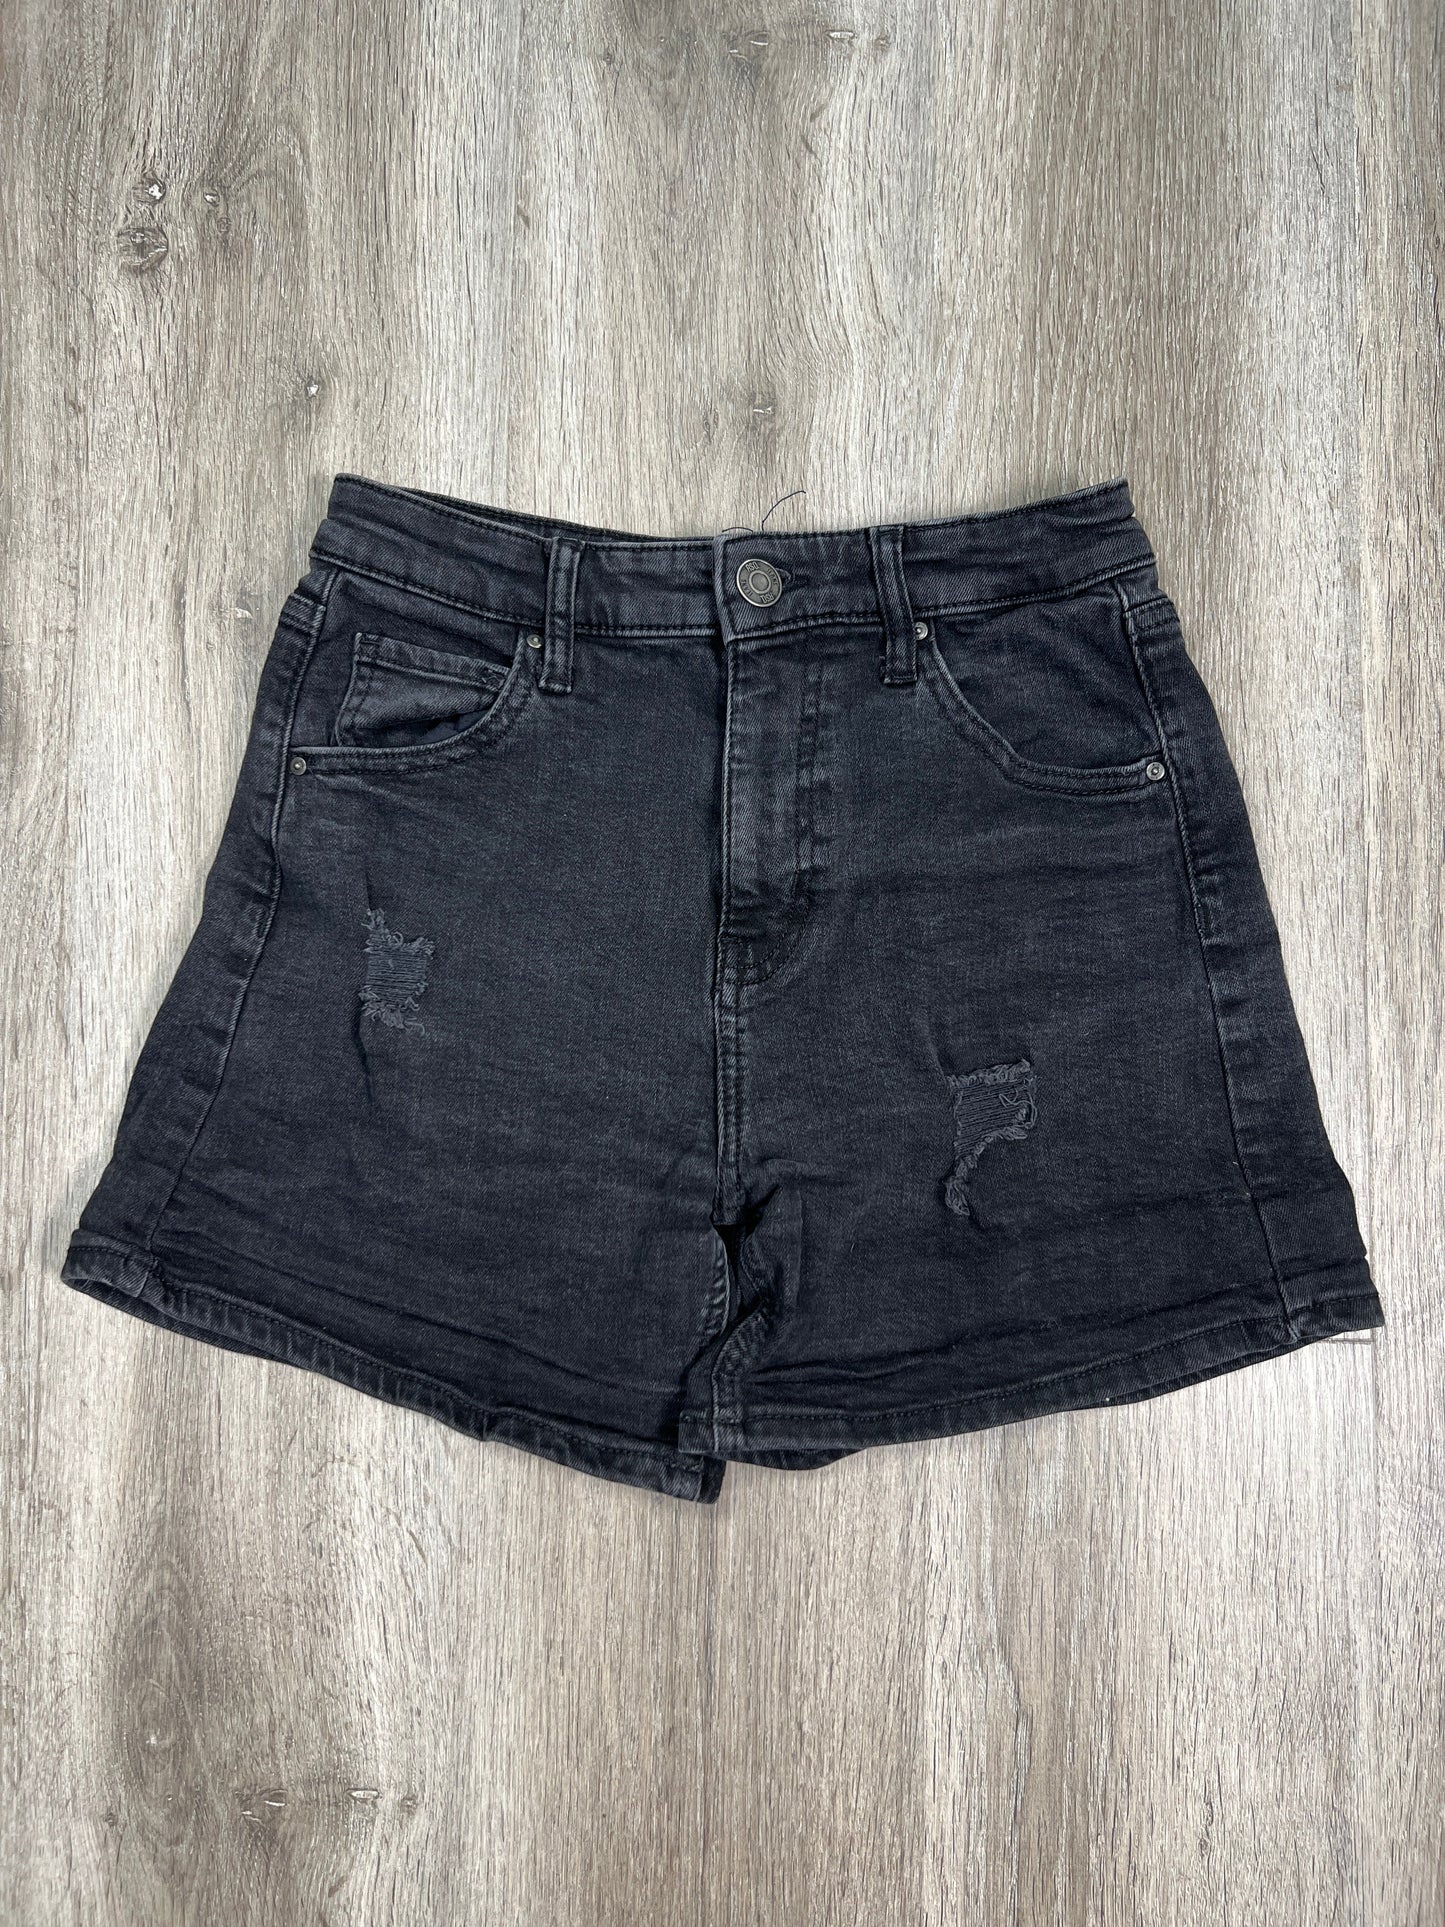 Black Denim Shorts Clothes Mentor, Size 0